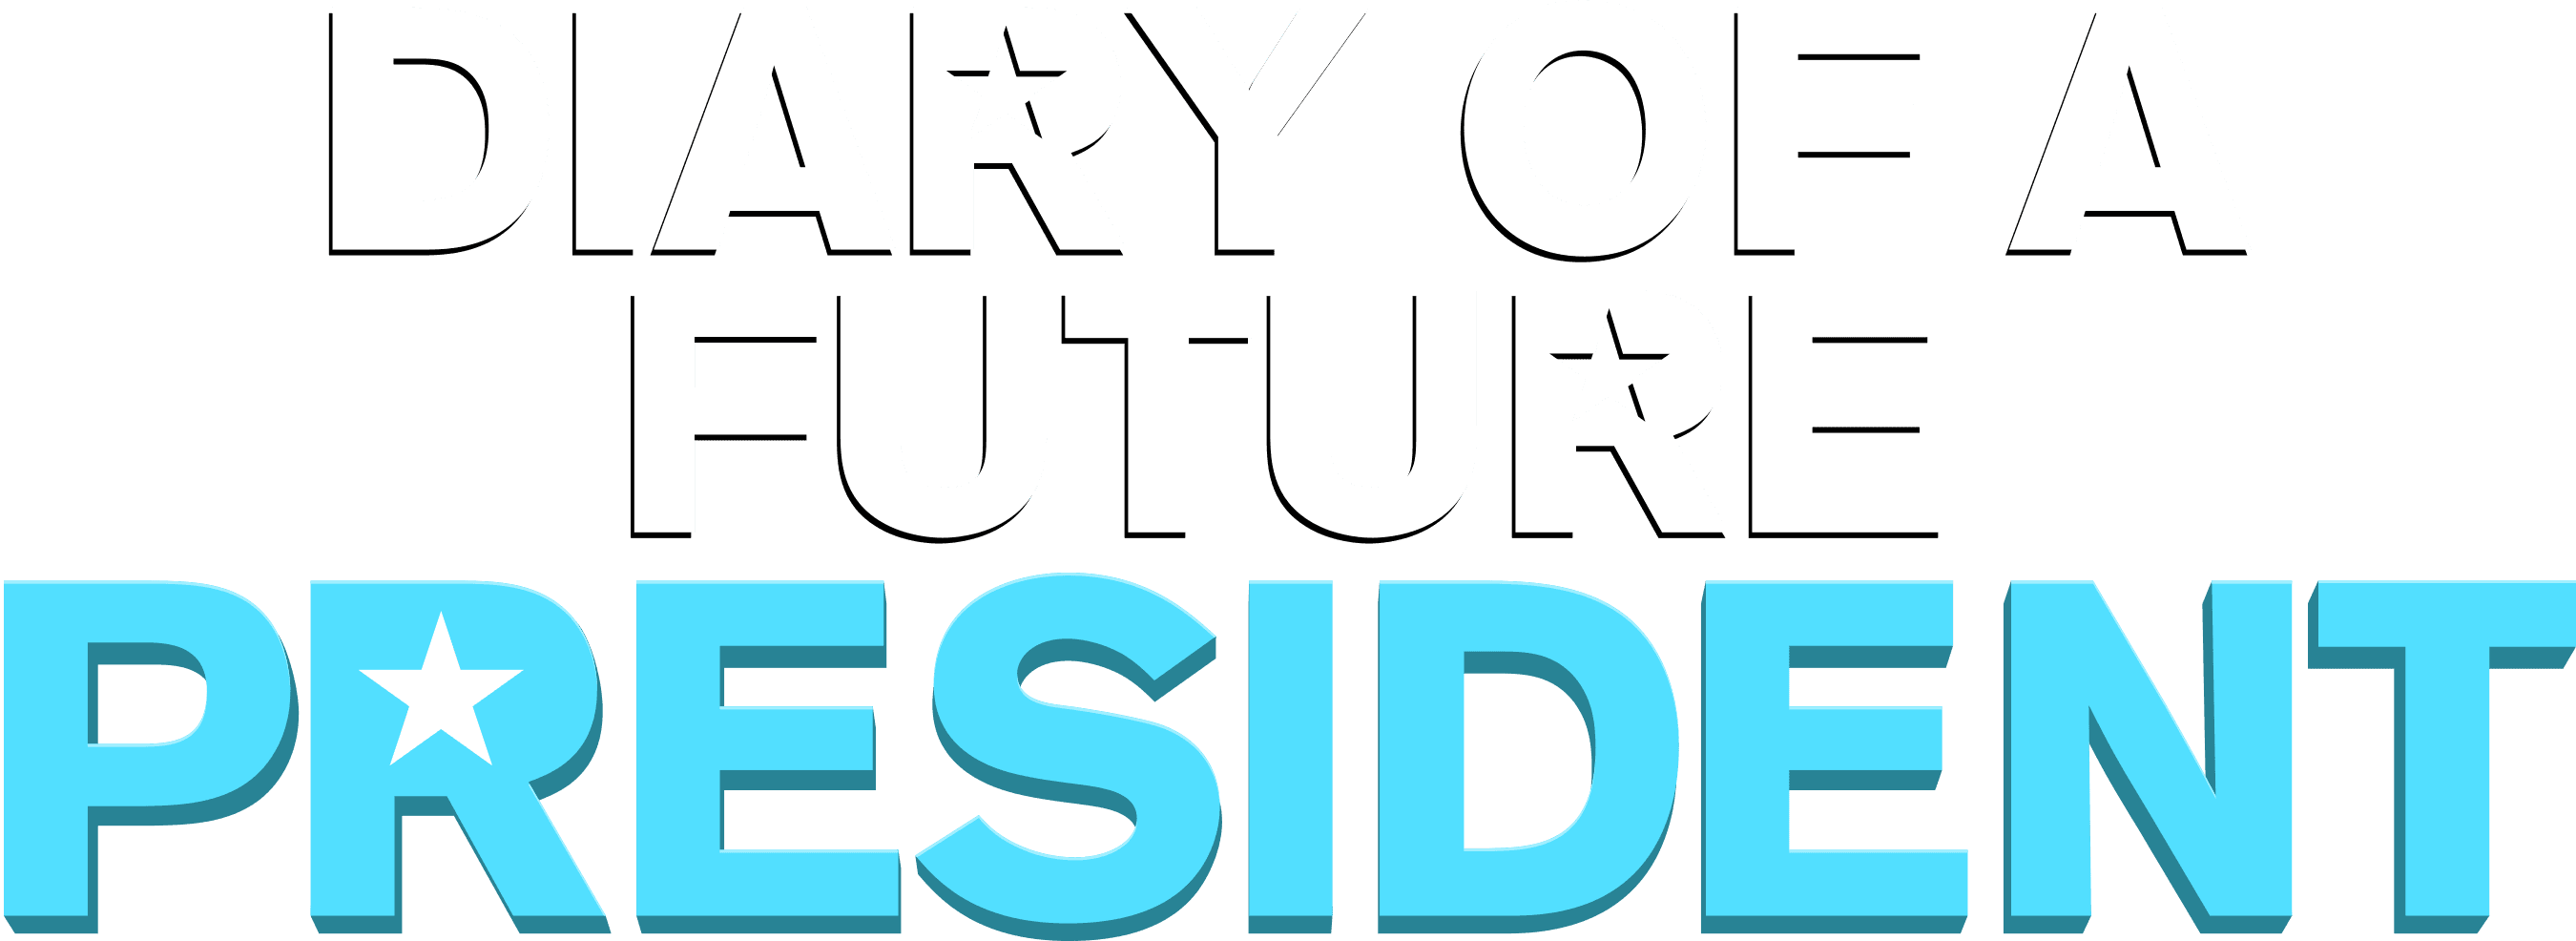 Diary of a Future President logo